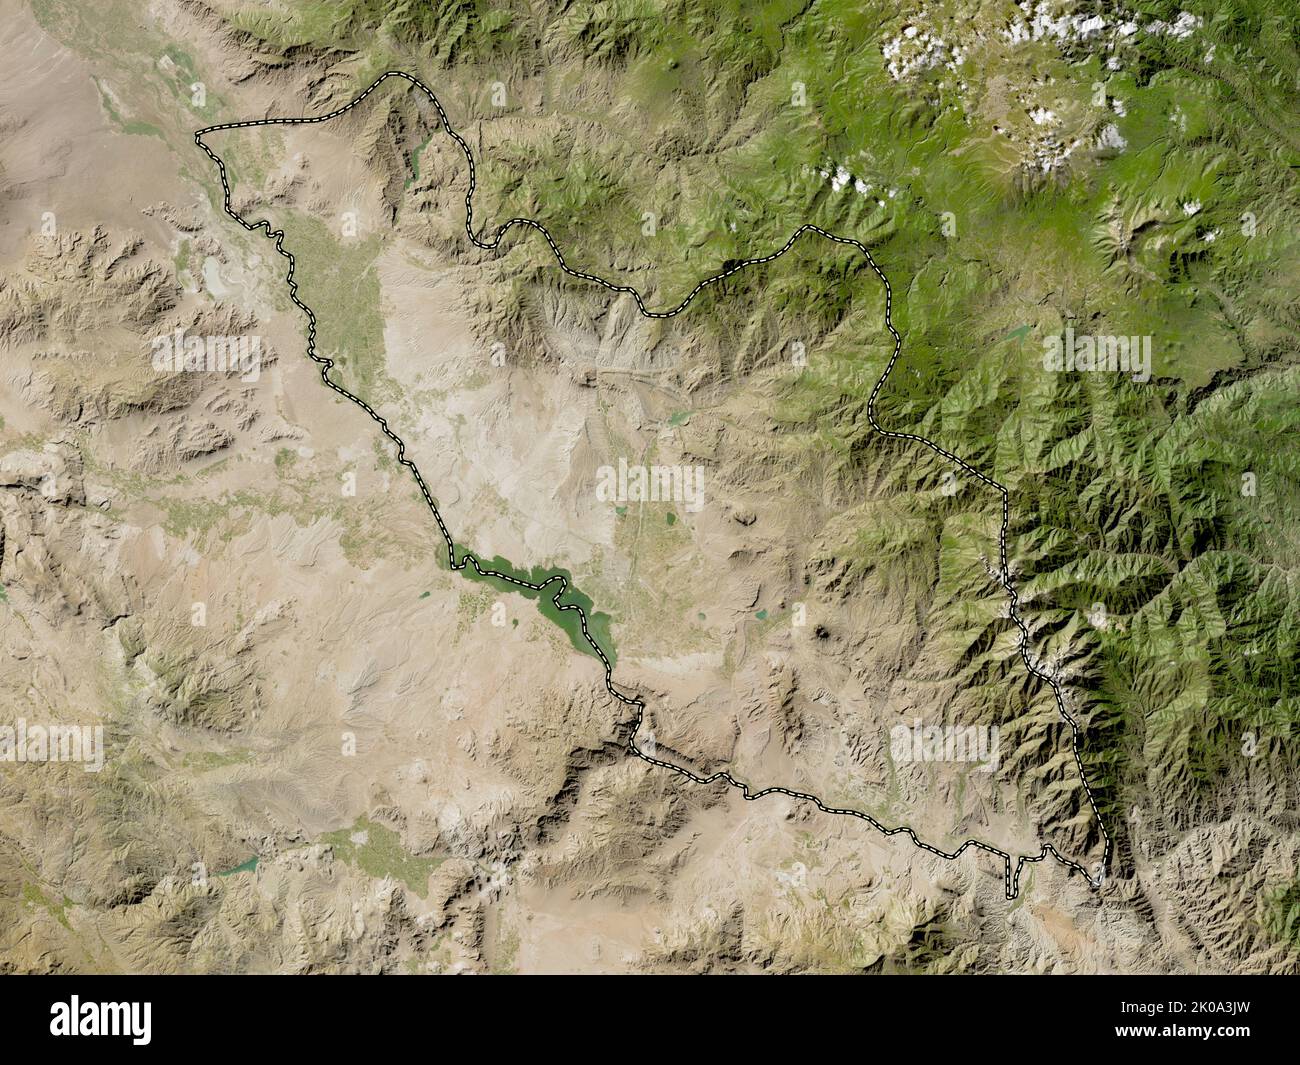 Nakhchivan, region of Azerbaijan. Low resolution satellite map Stock Photo